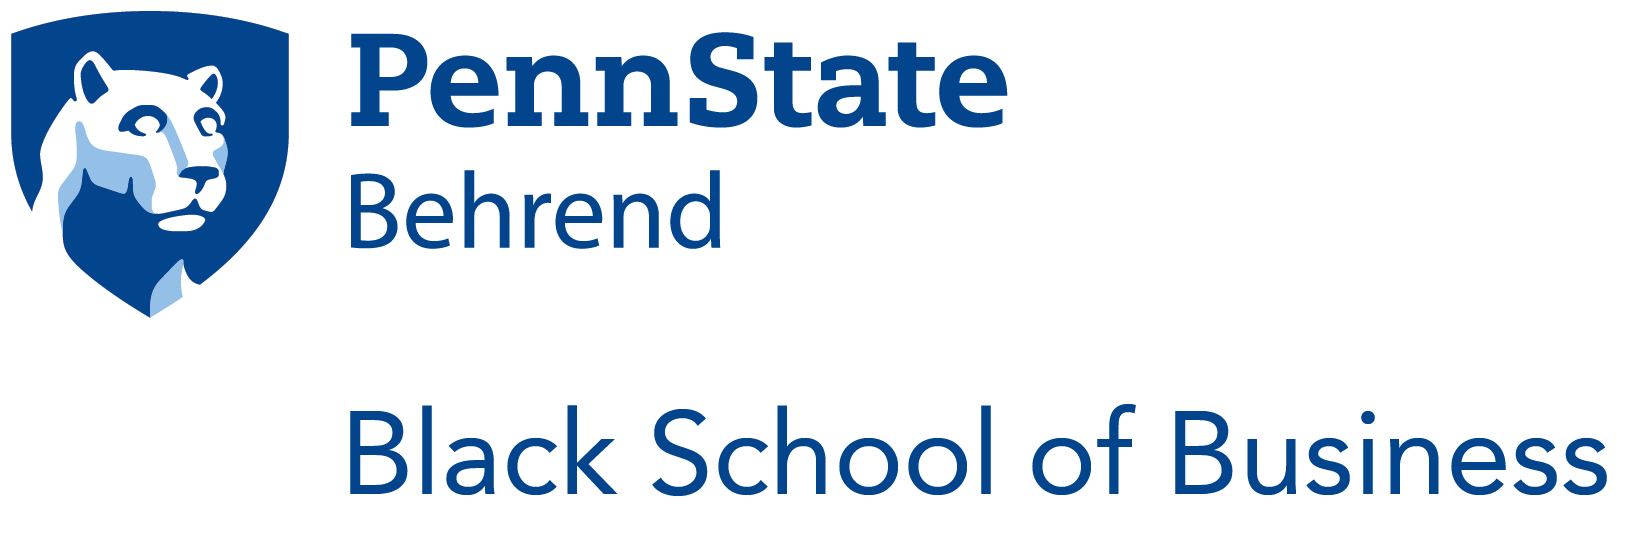 Penn State Behrend Black School of Business